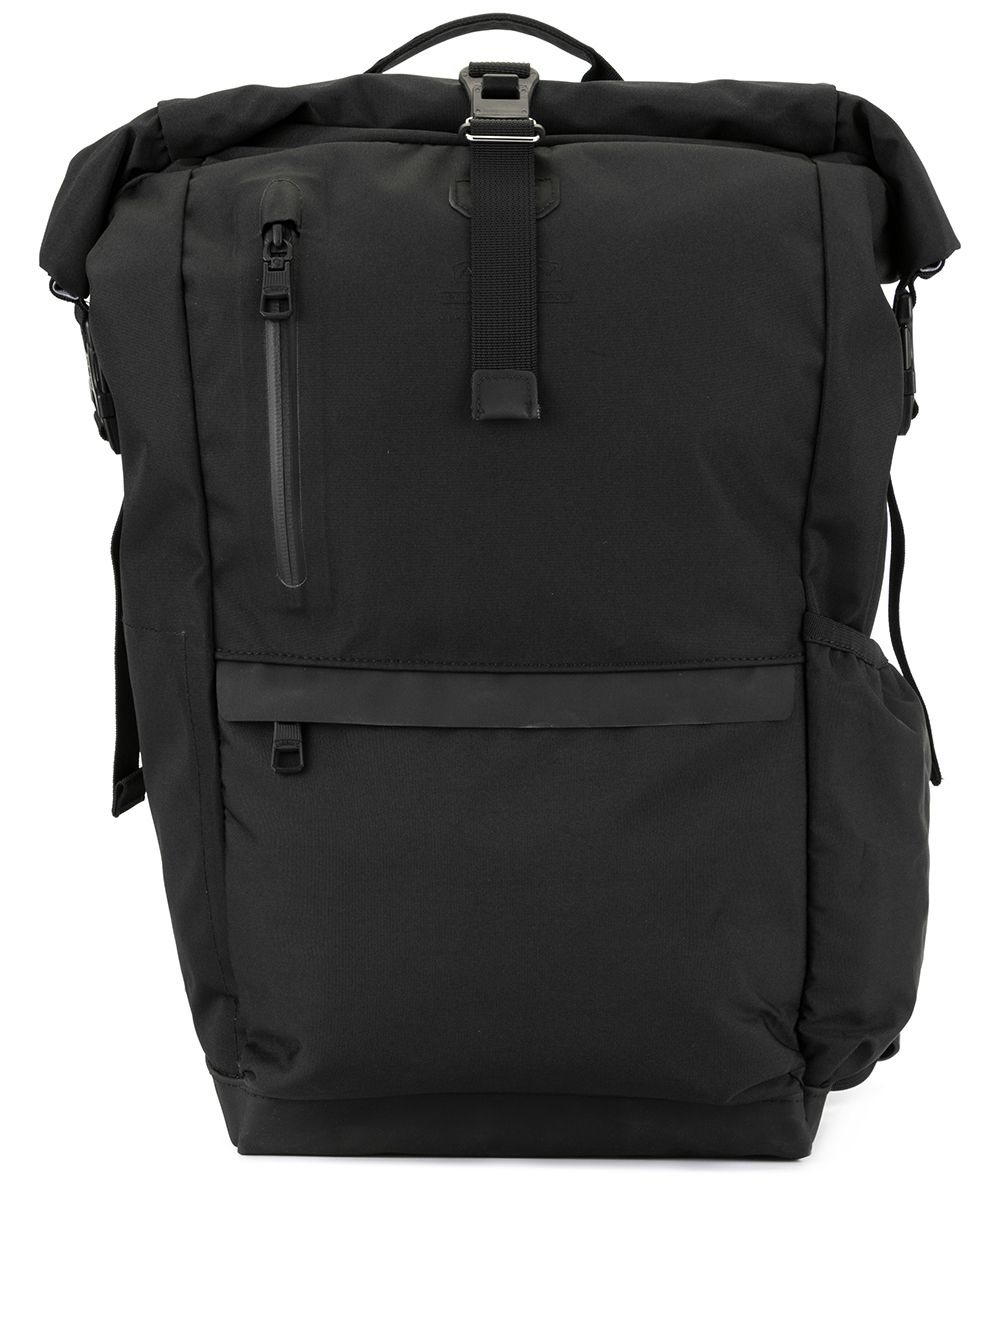 As2ov Roll Top Backpack - Farfetch